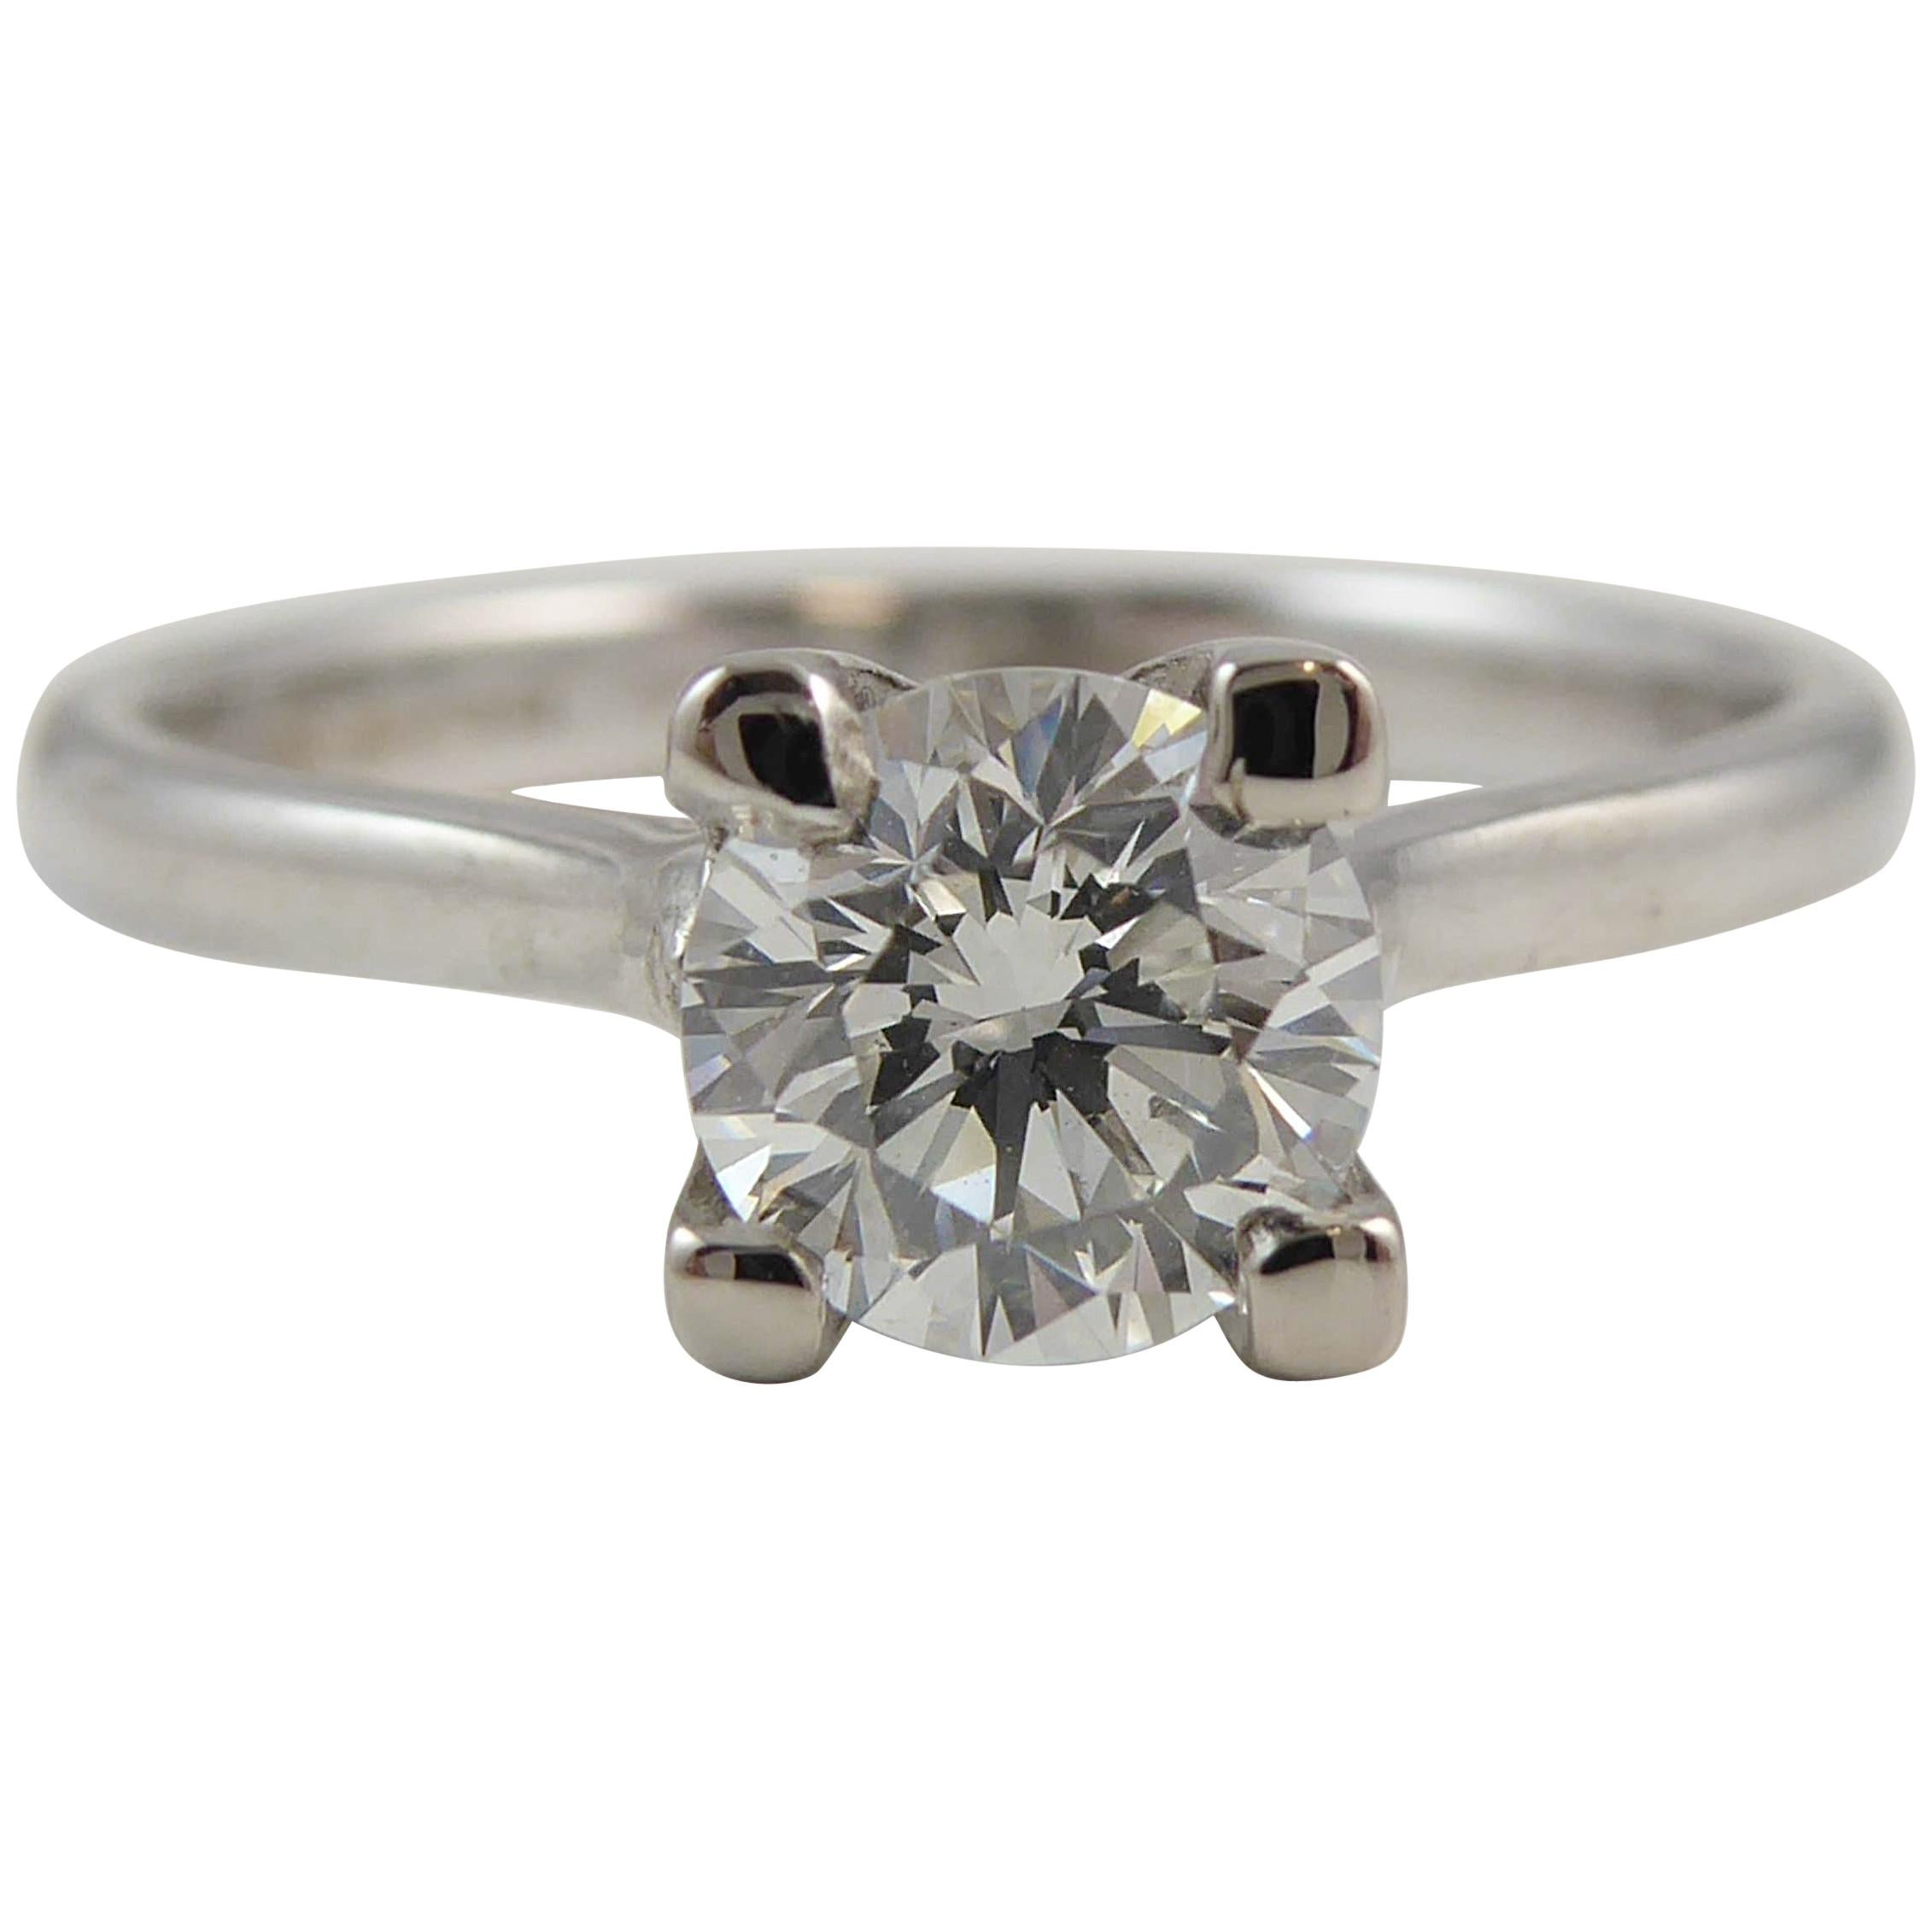 Certified Contemporary Diamond Solitaire Ring, Brilliant Cut Diamond 0.70 Carat